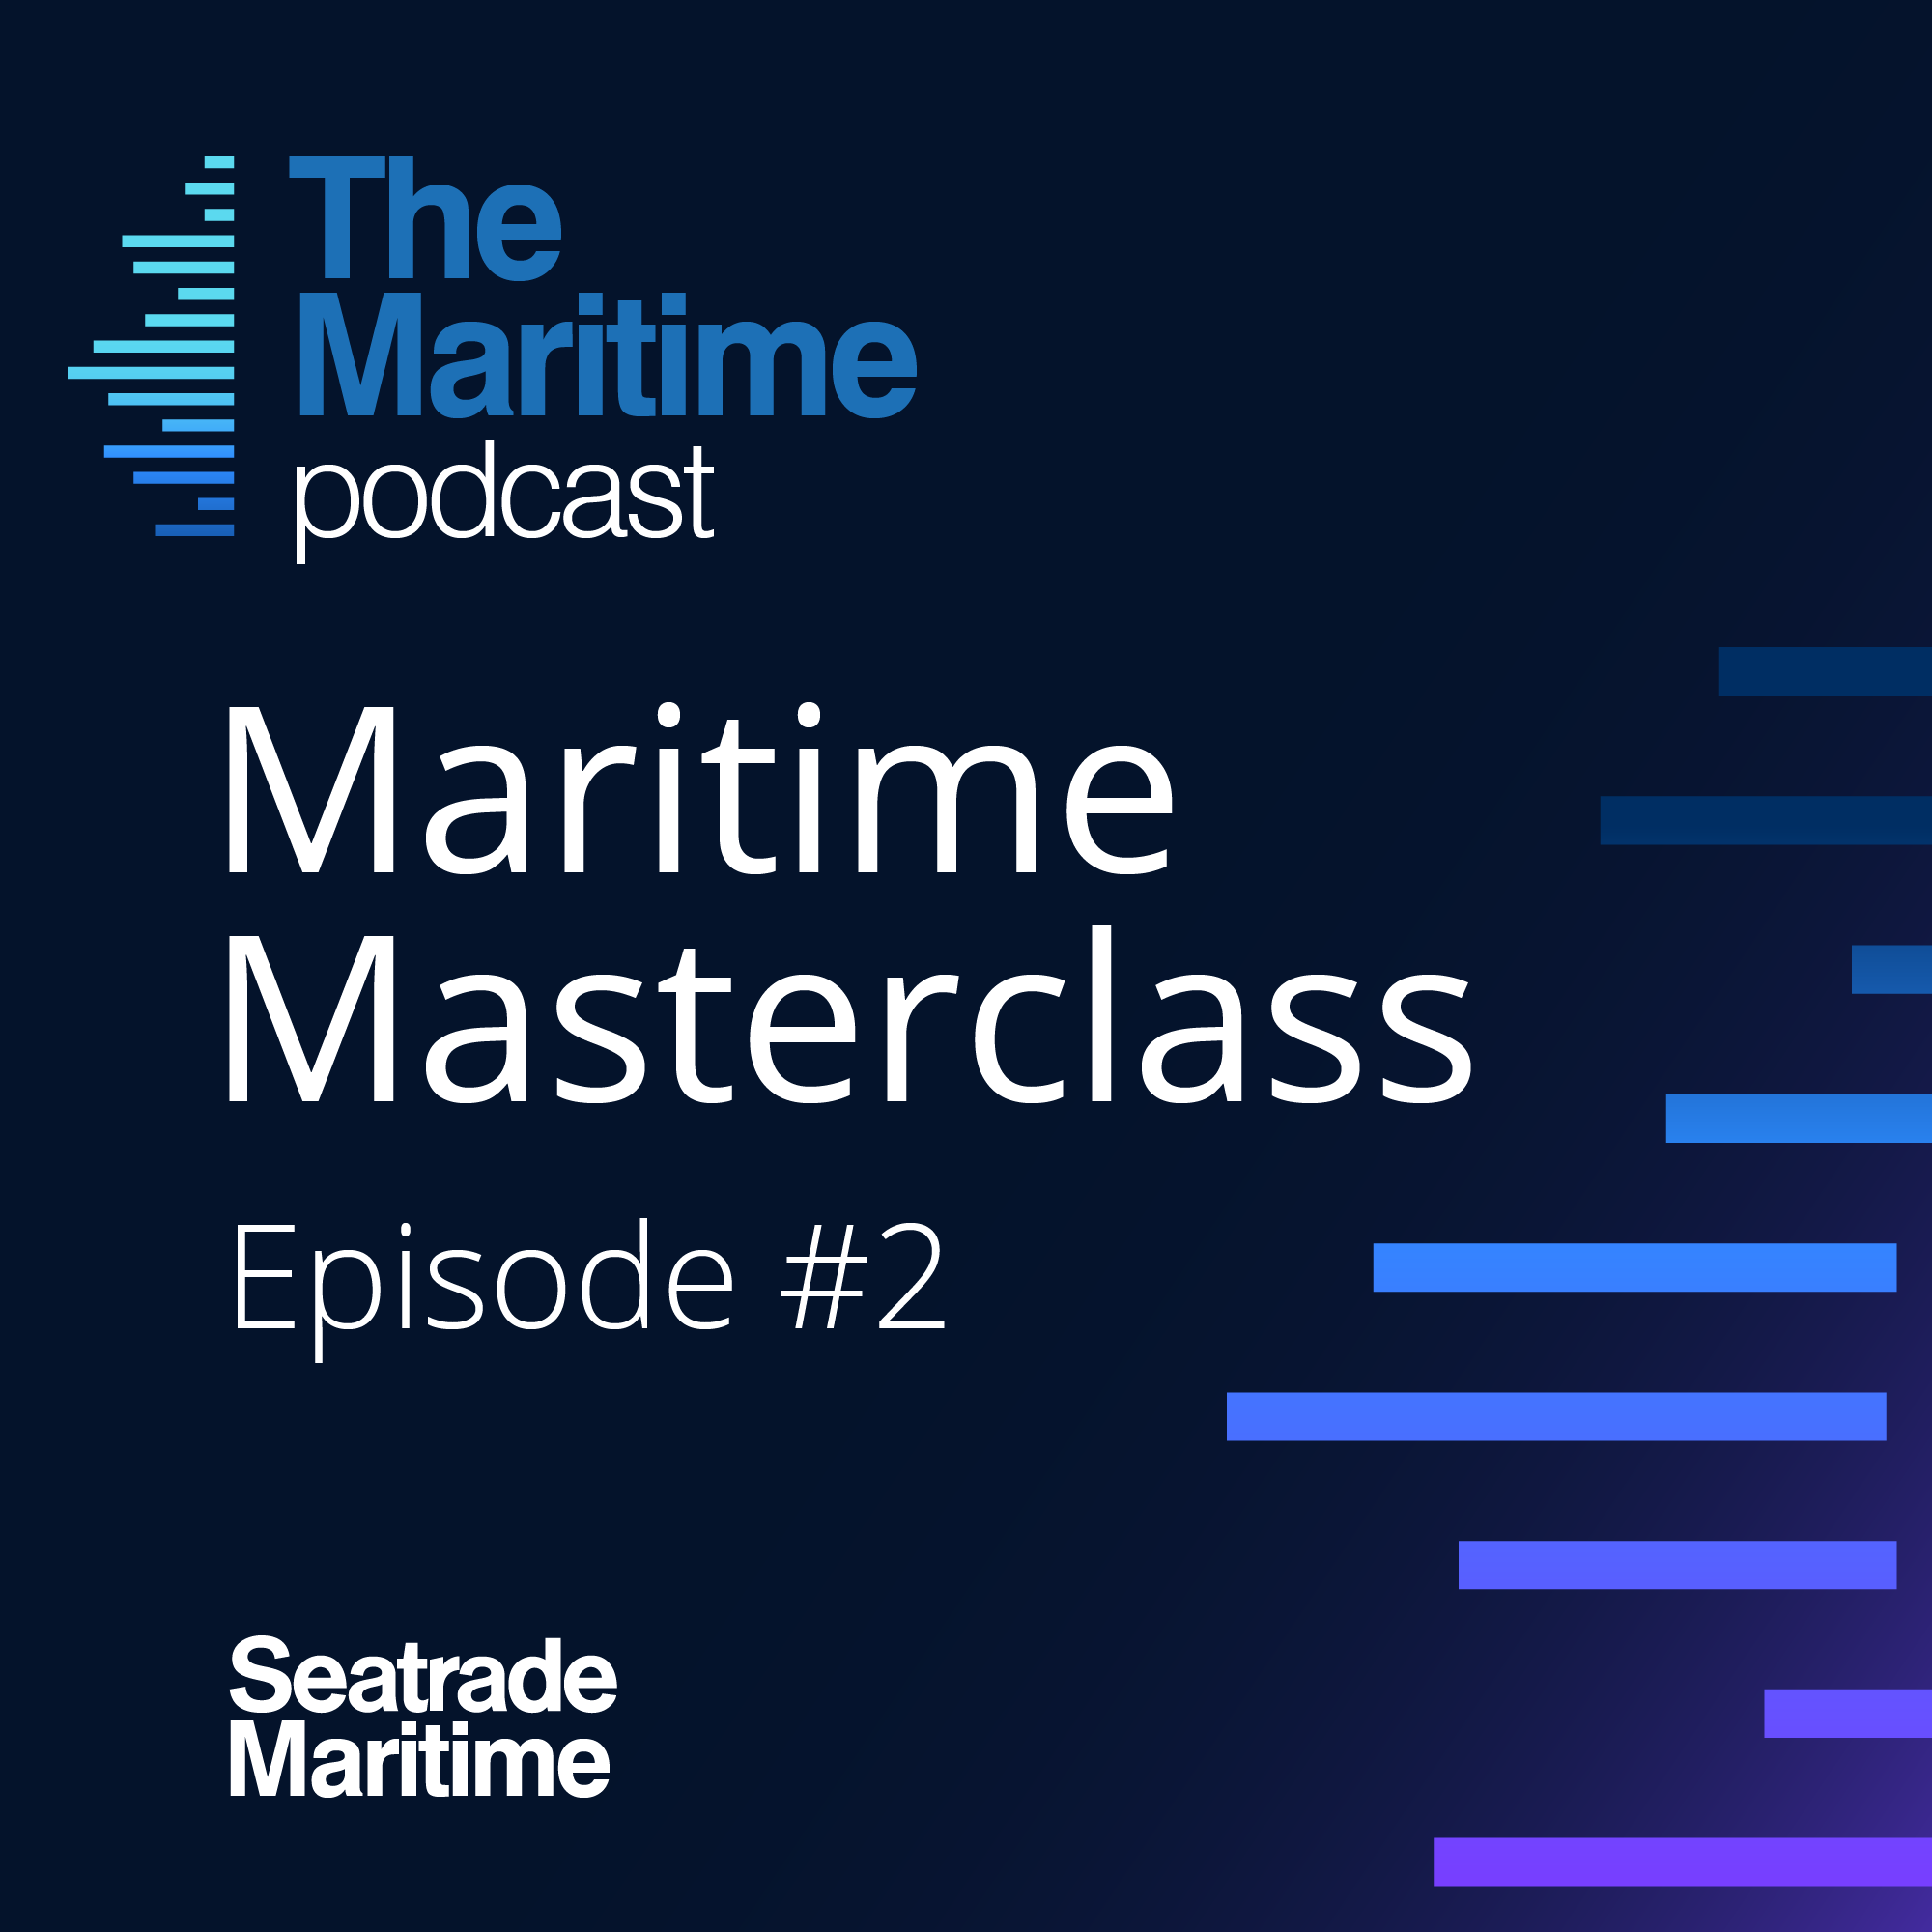 Artwork for podcast Seatrade Maritime Podcast